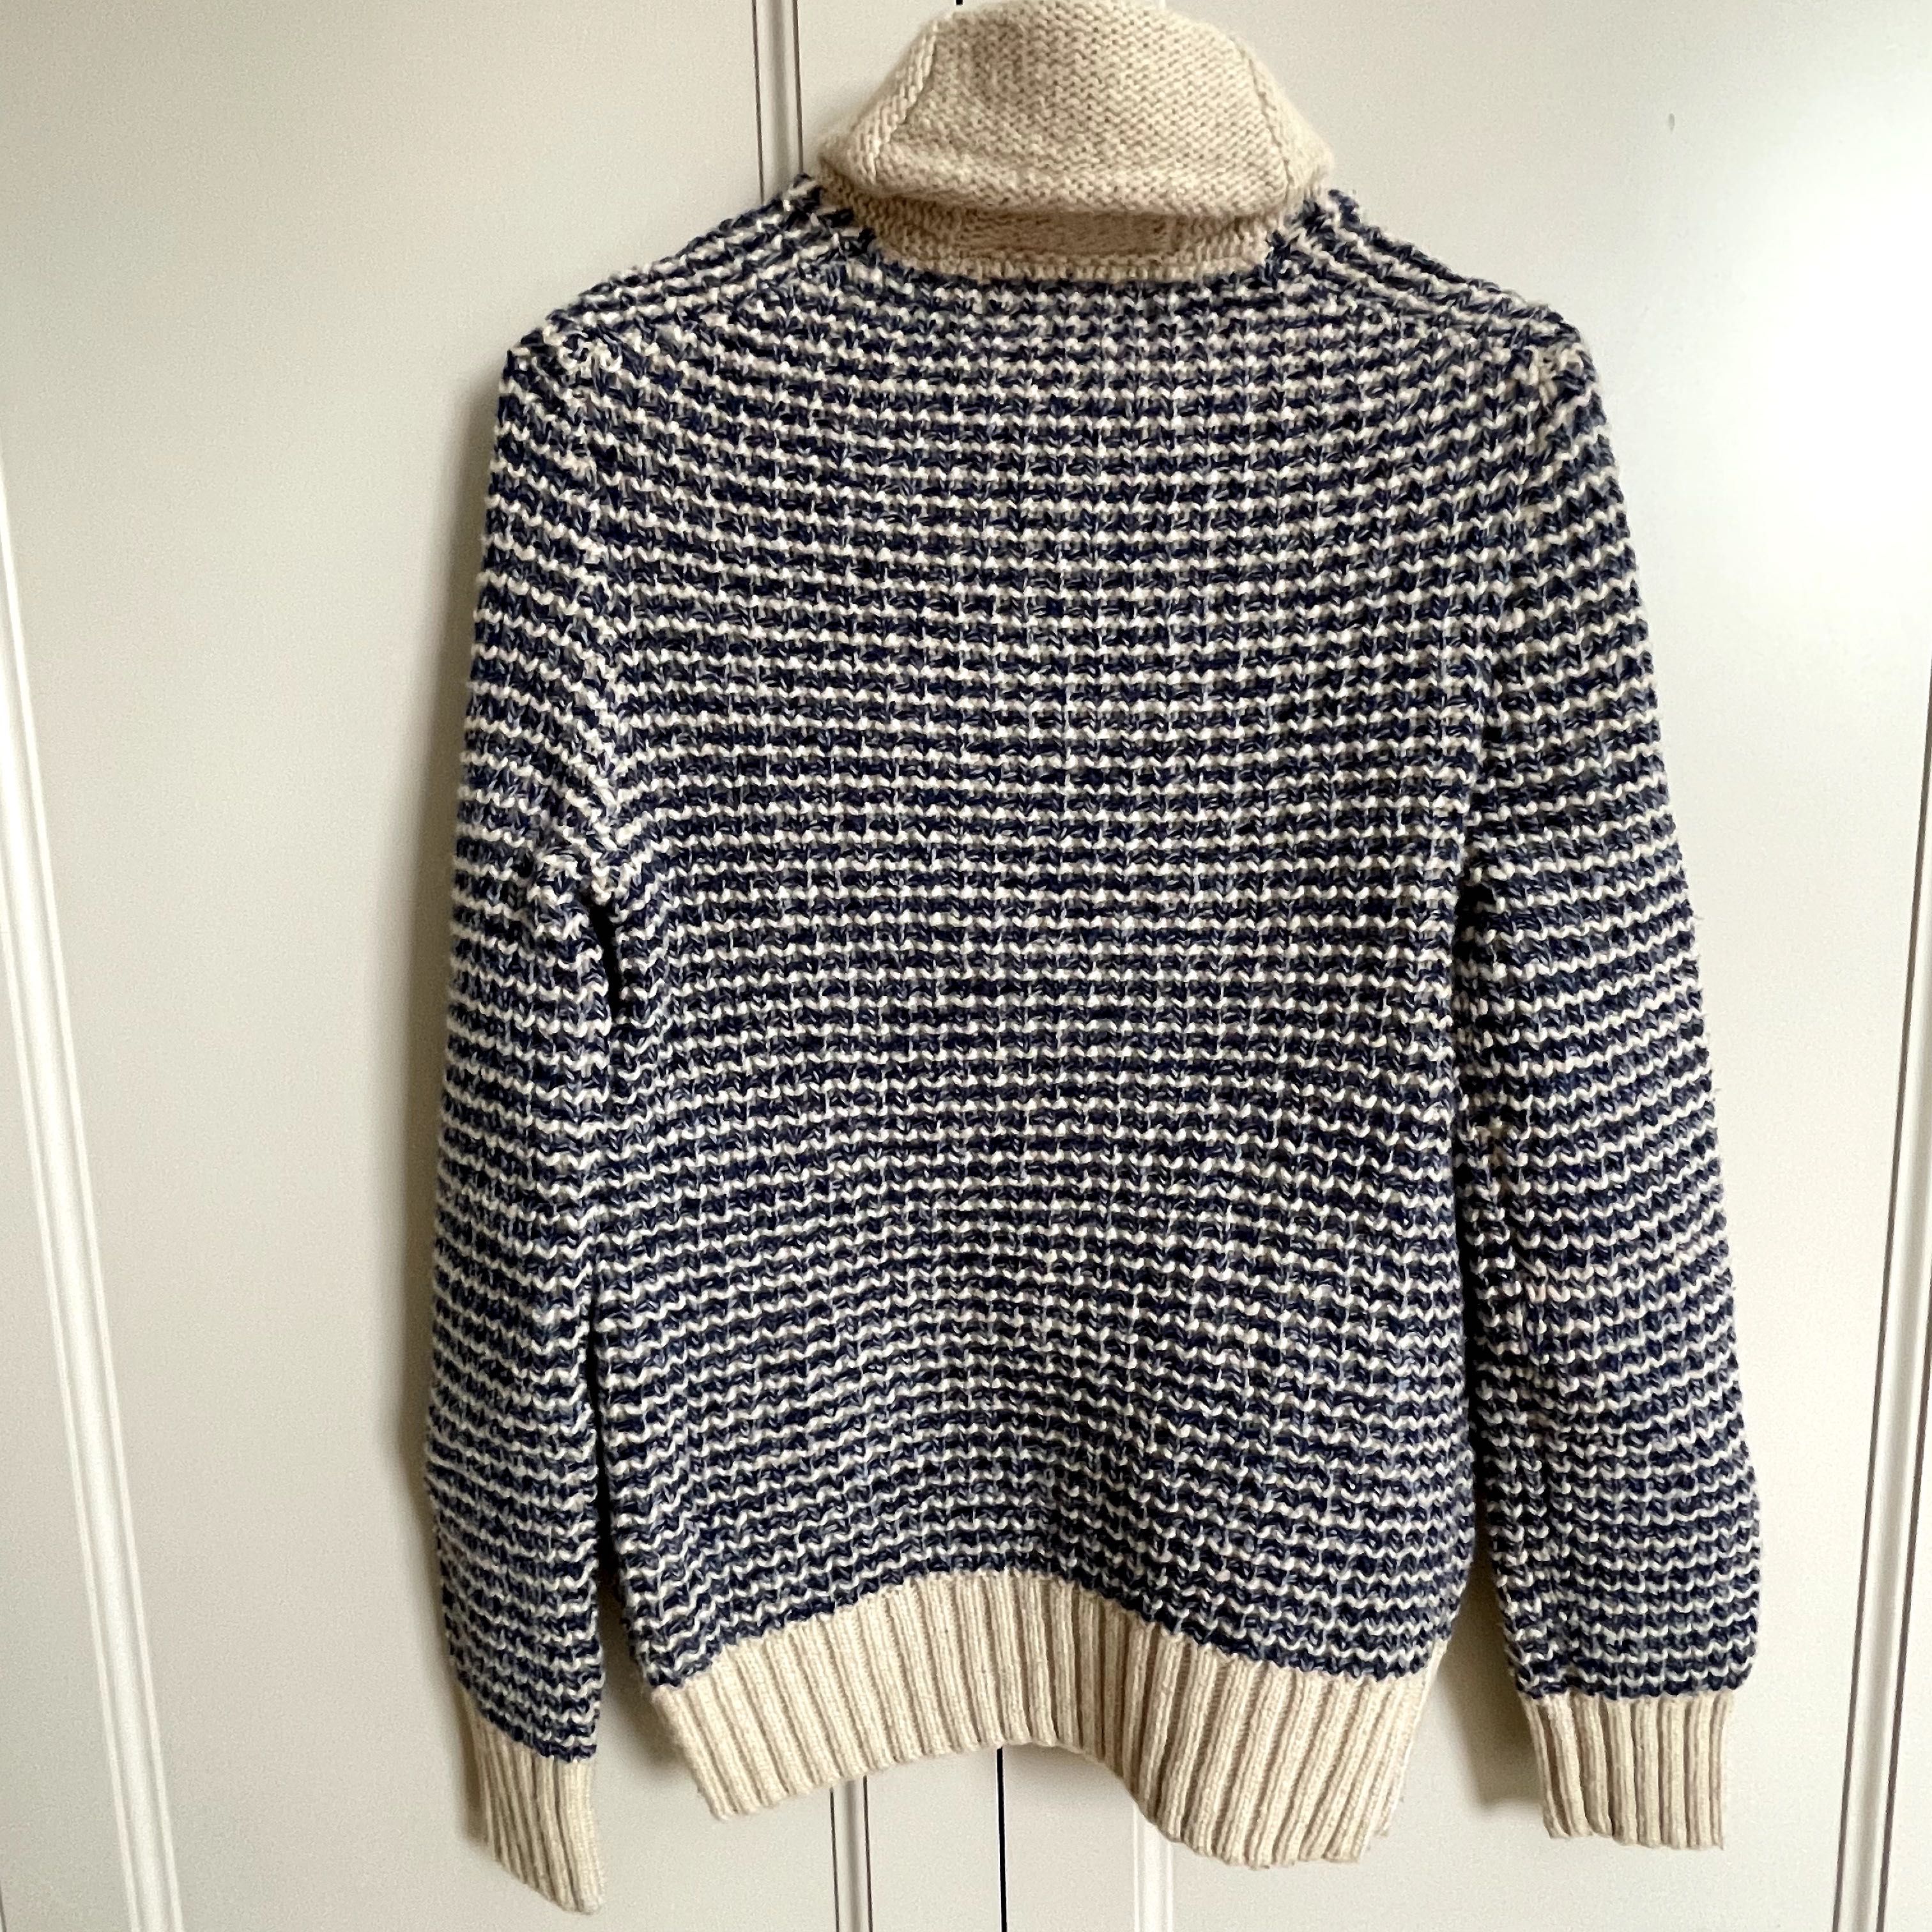 Sweter wełniany H&M